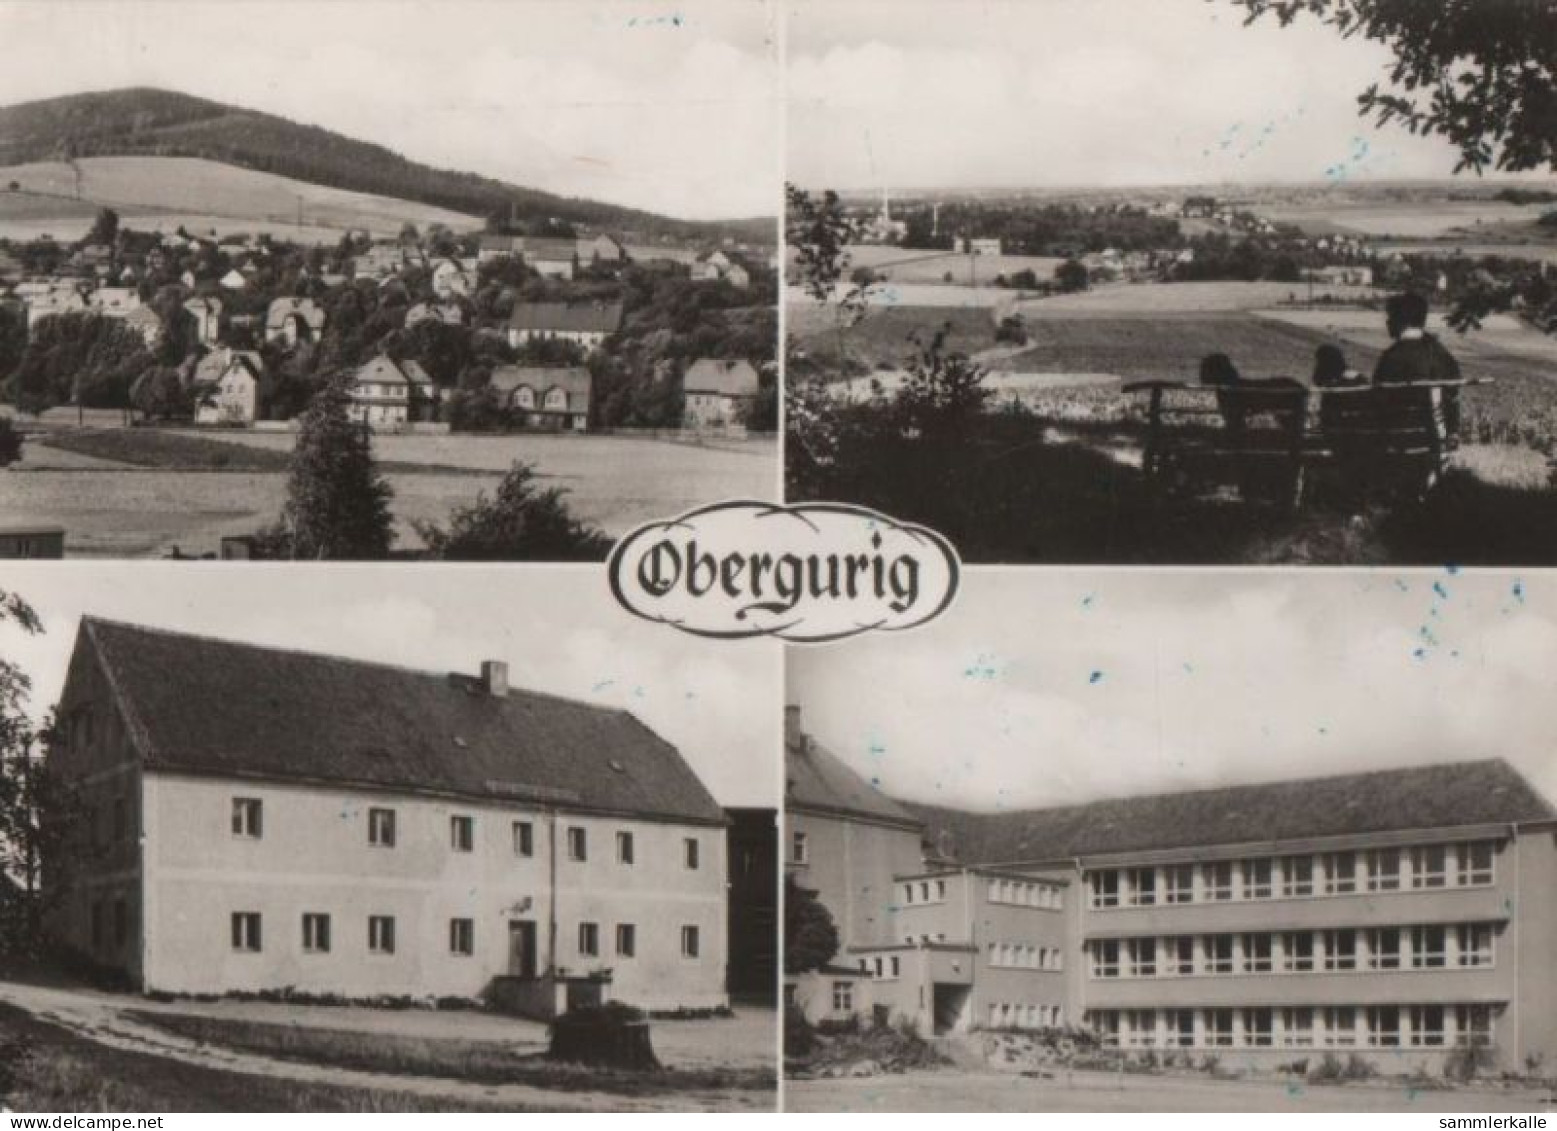 43661 - Obergurig - Mit 4 Bildern - Ca. 1970 - Bautzen